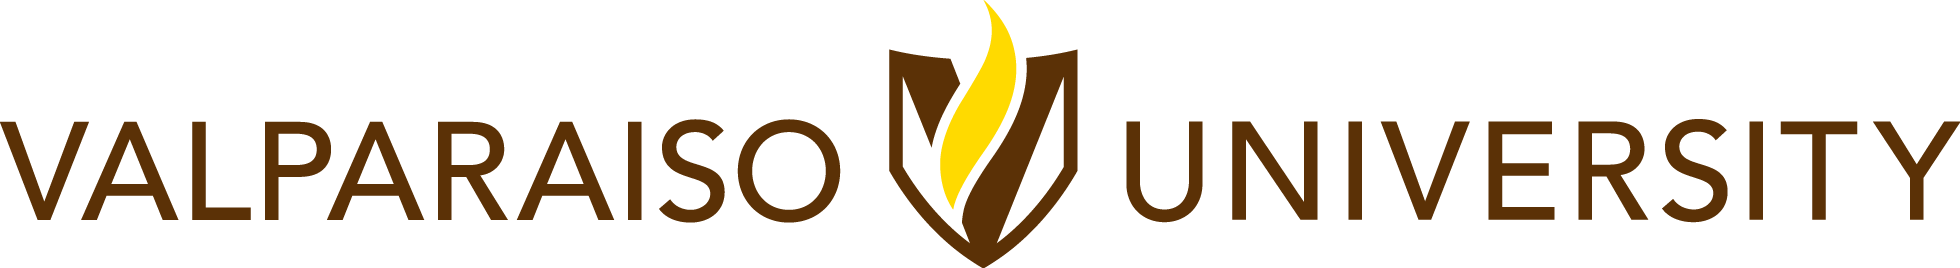 Valpo Logo - Our Logos | Valparaiso University Brand